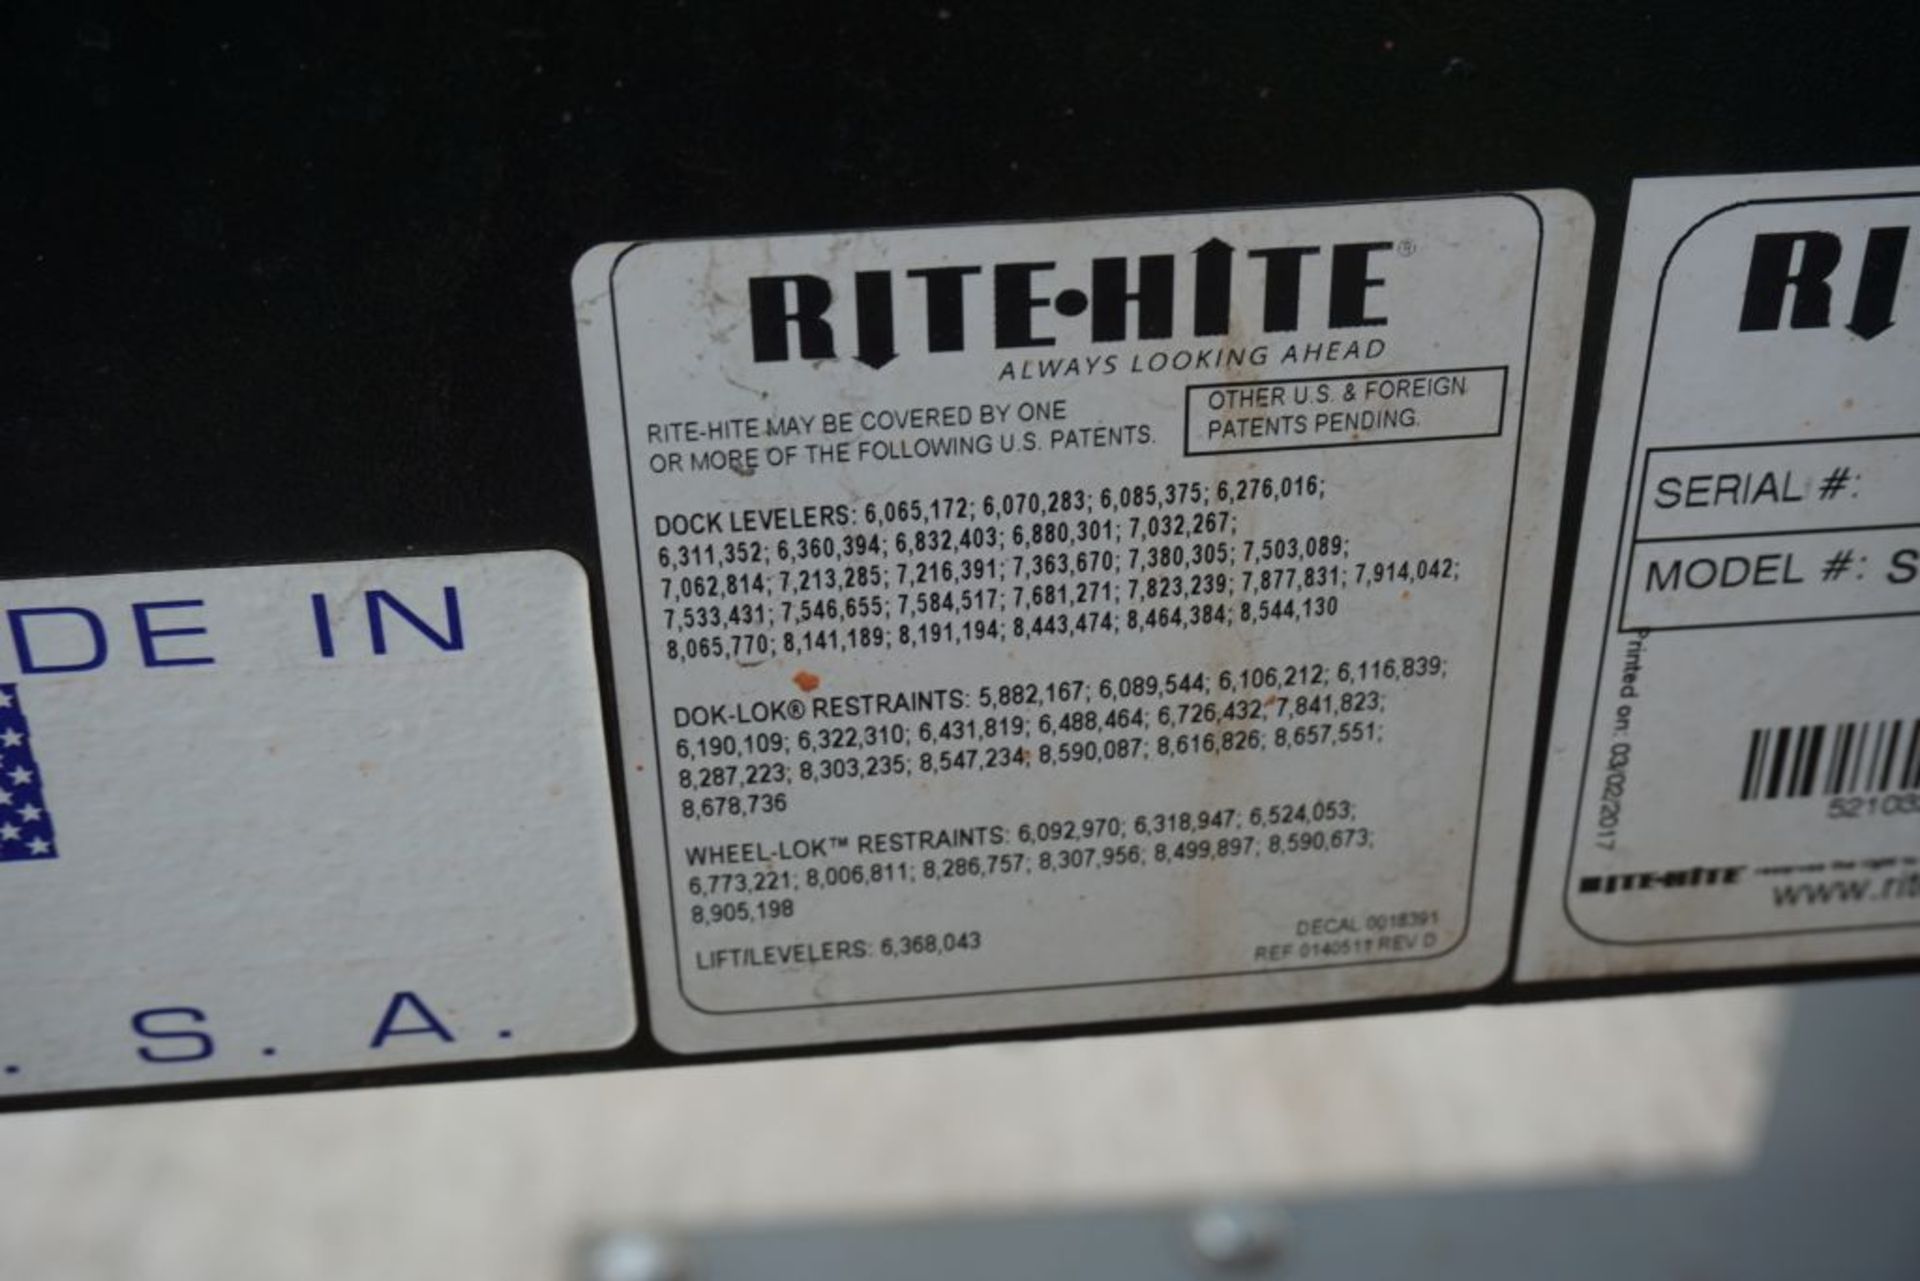 Rite Hite Dock Leveler and Vehicle Restraint | 9" Dock Leveler; SHR-50 Dok-Lok Vehicle Restraint - Image 6 of 8